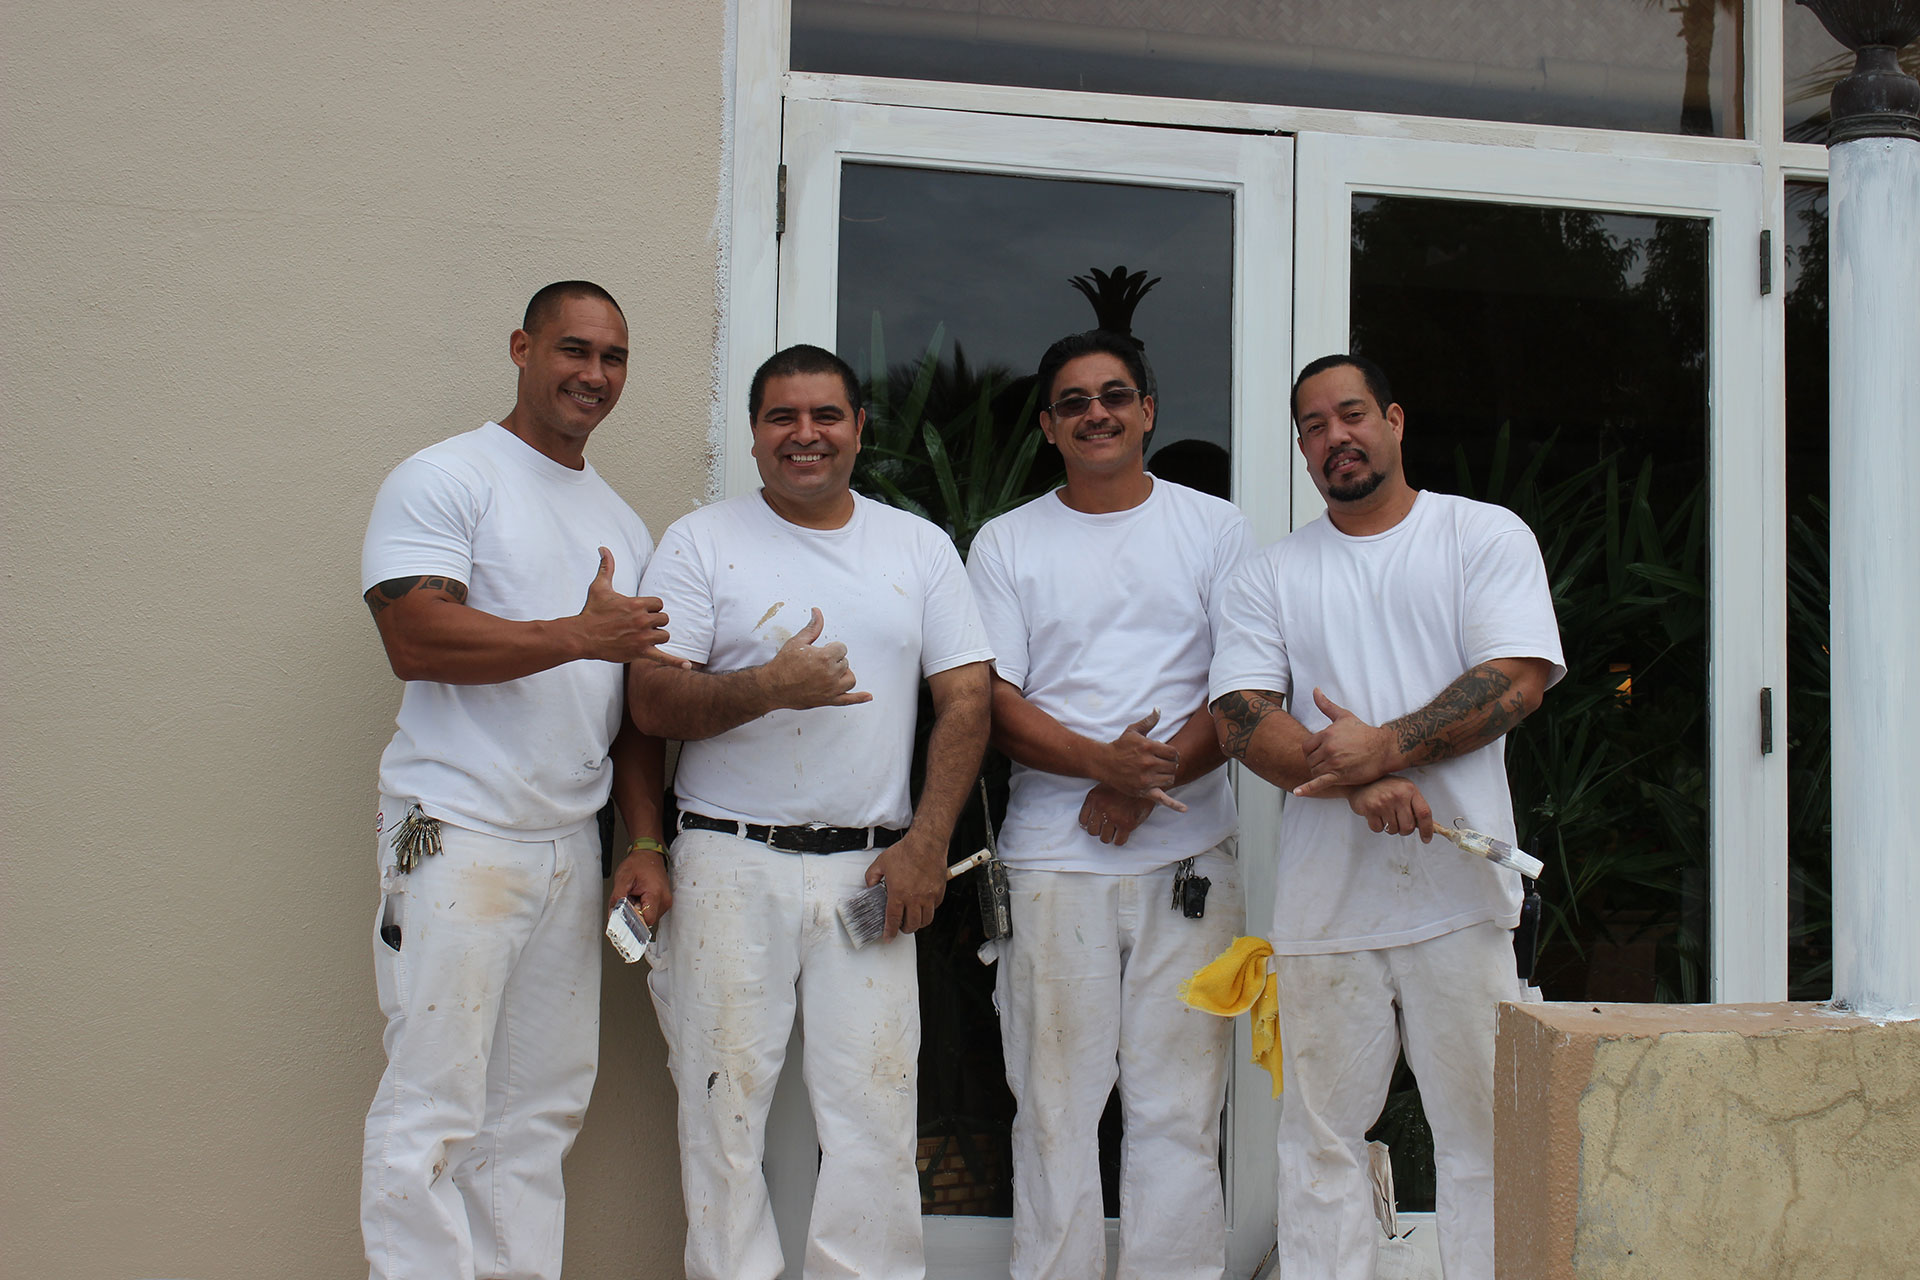 Maintenance Department - Painters (l-r): Dalton Magno, Martin Garcilazo, Darren Lung and Sean Figueroa. 